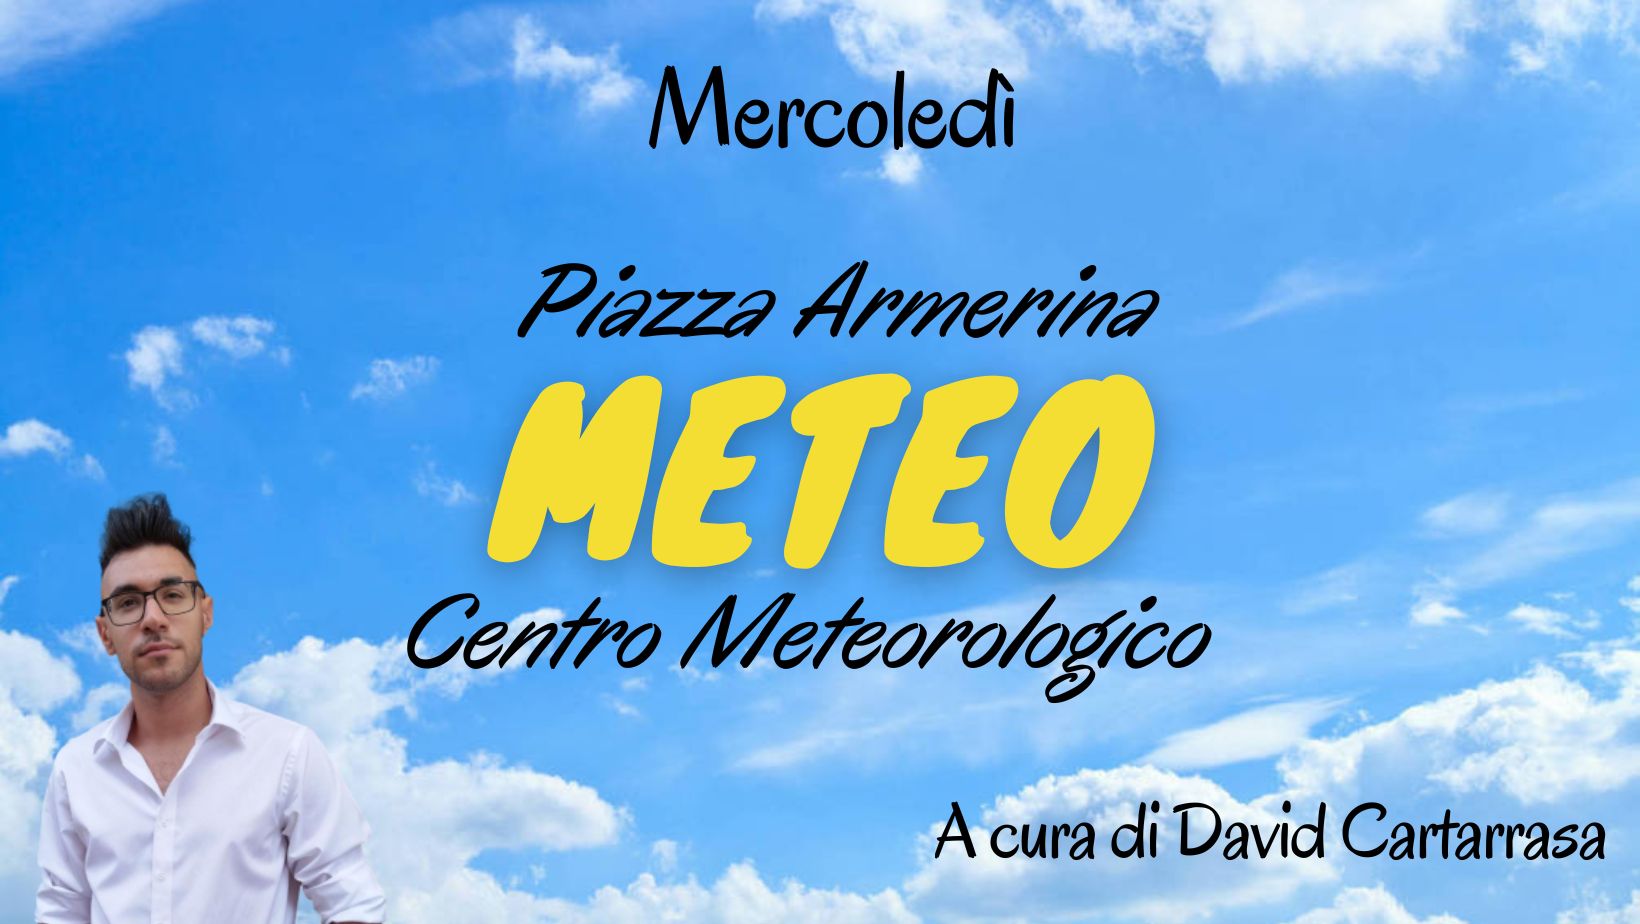 Meteo Piazza Armerina : mercoledì  25 gennaio 2023 giornata piovosa